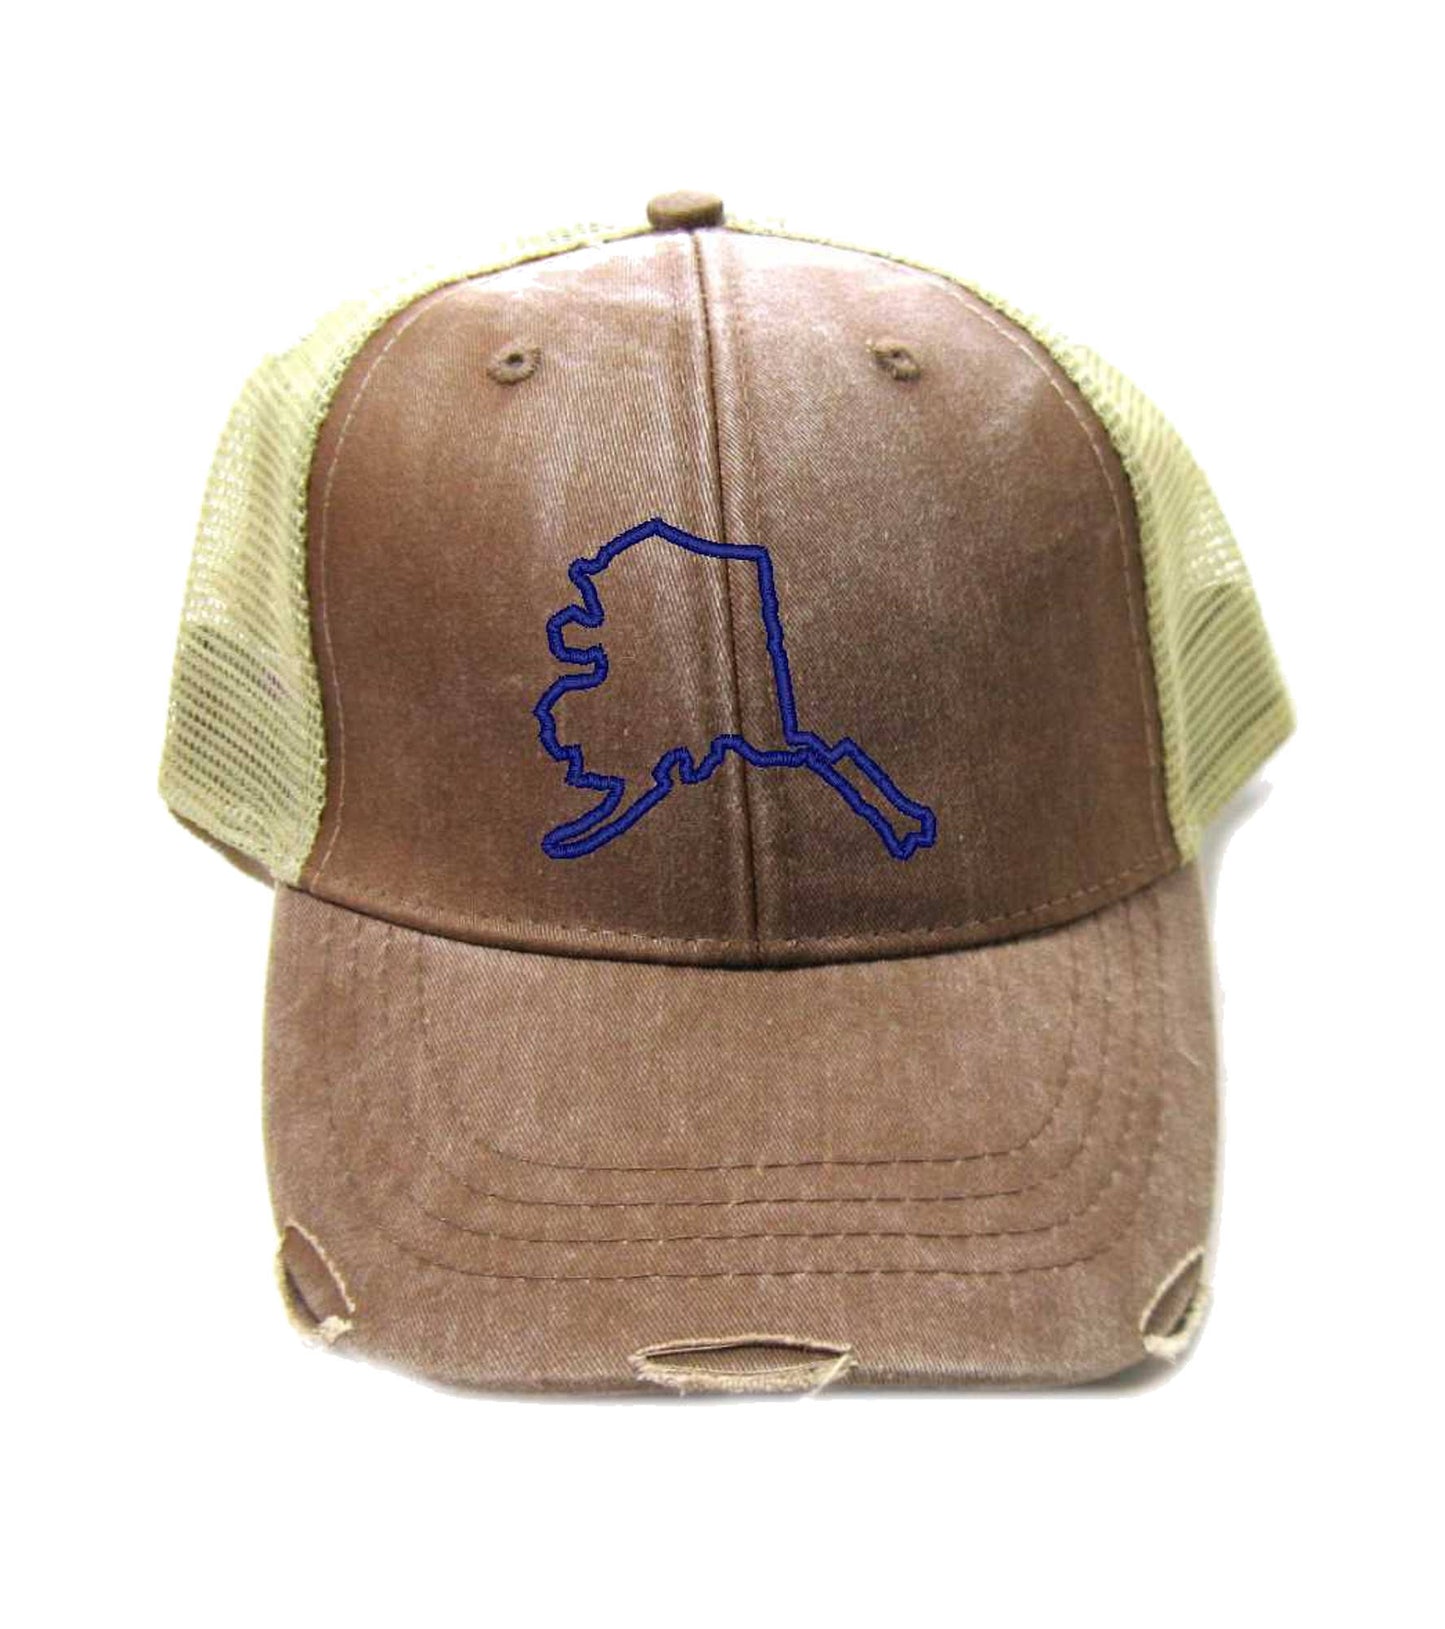 Alaska Hat - Distressed Snapback Trucker Hat - Alaska State Outline - Many Colors Available